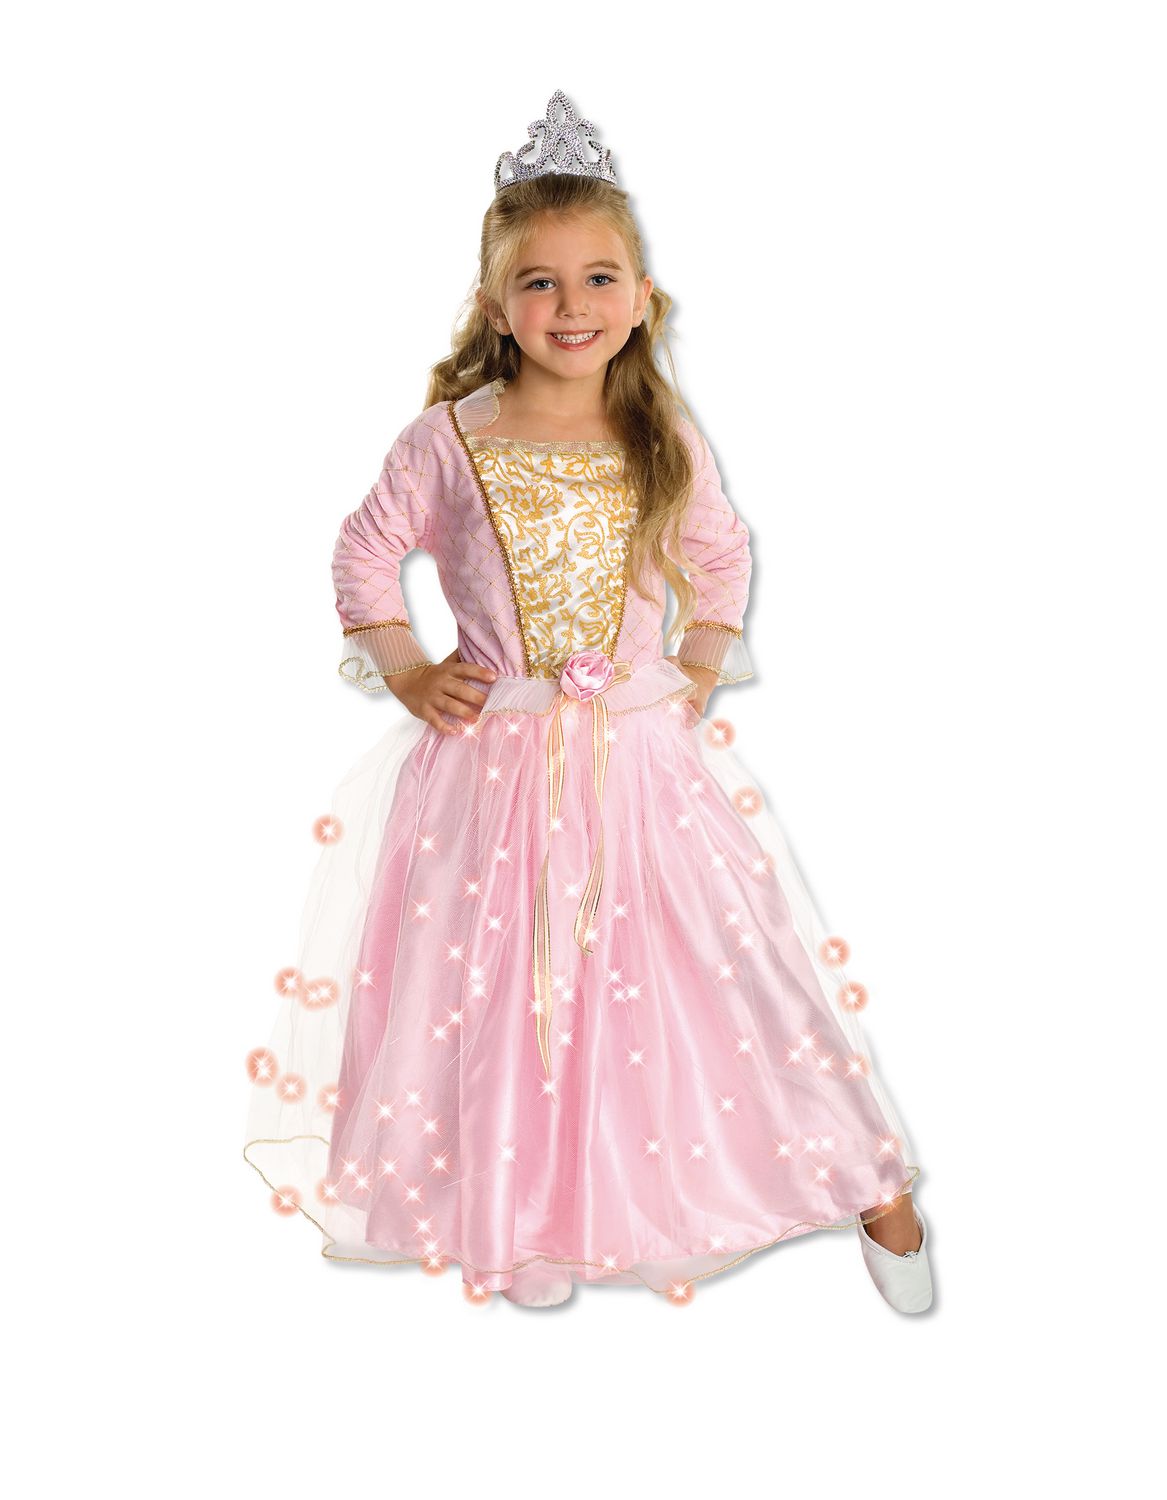 Anniversaire Fete Halloween Carnaval Jaune Taille 18-24 Mois Lito Angels Deguisement Robe Costume Princesse Belle Enfant Fille A